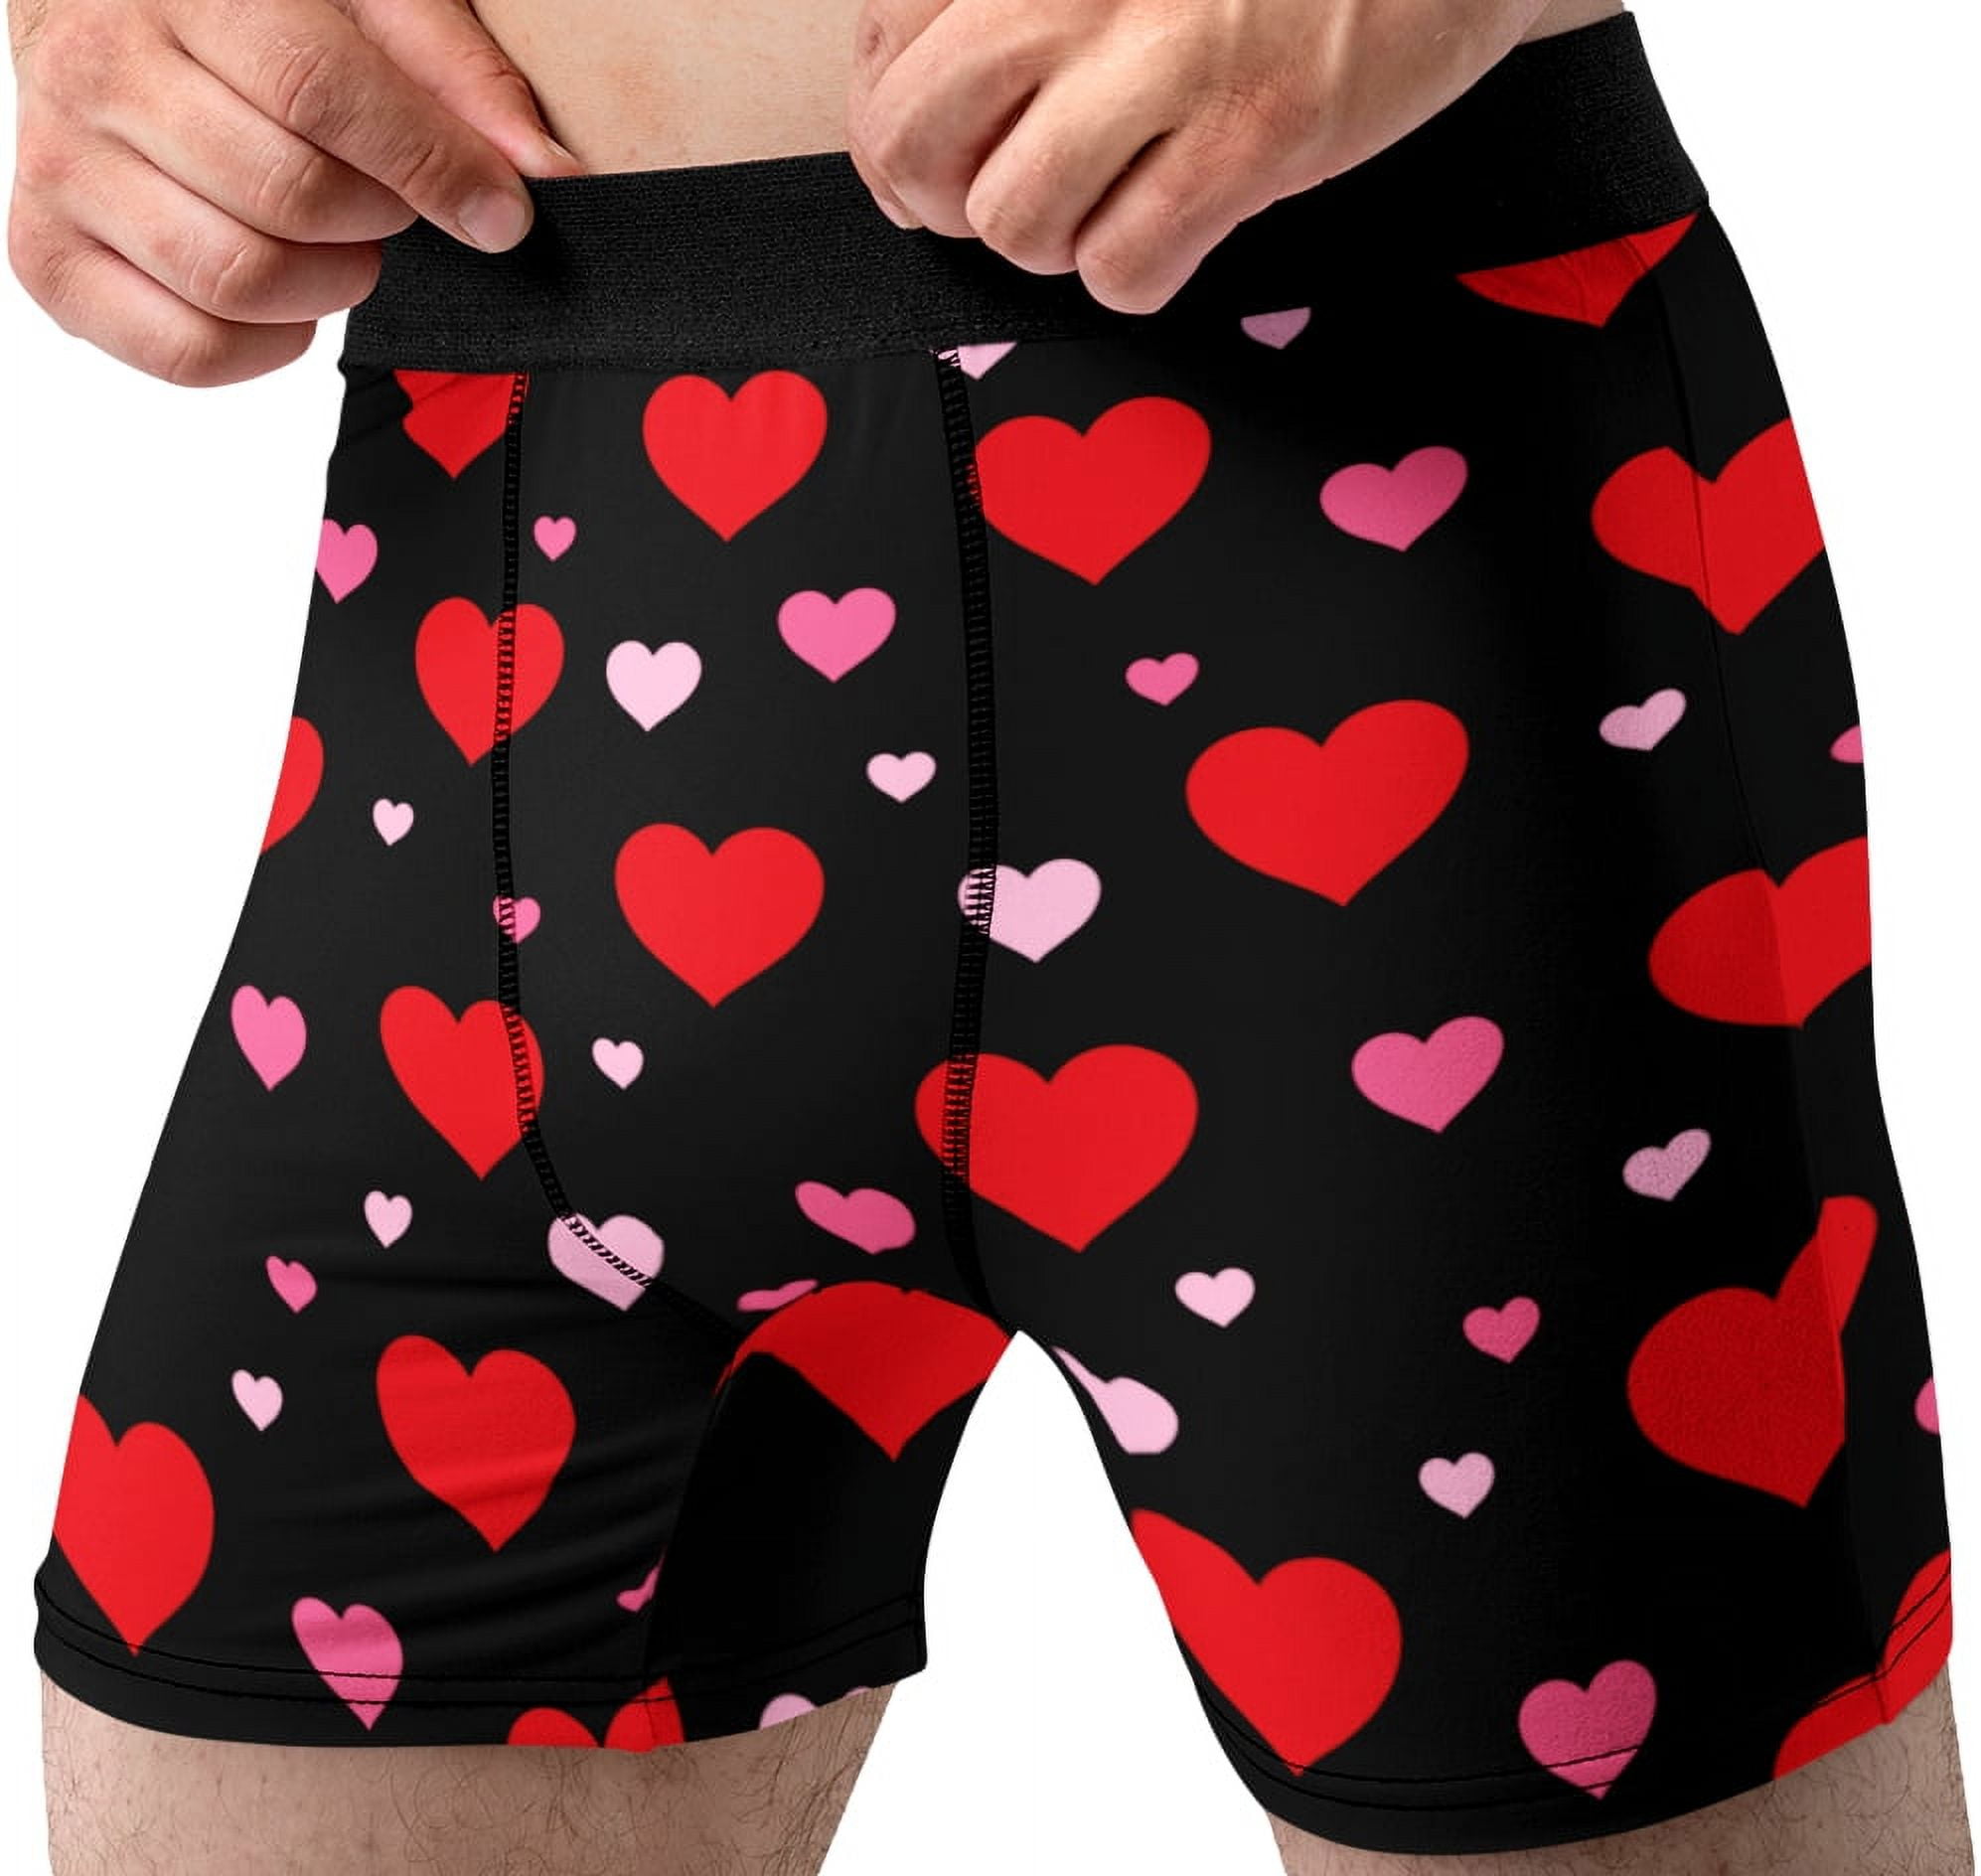 Mens Hearts all Over Boxer Briefs Underwear Novelty Fun Gift